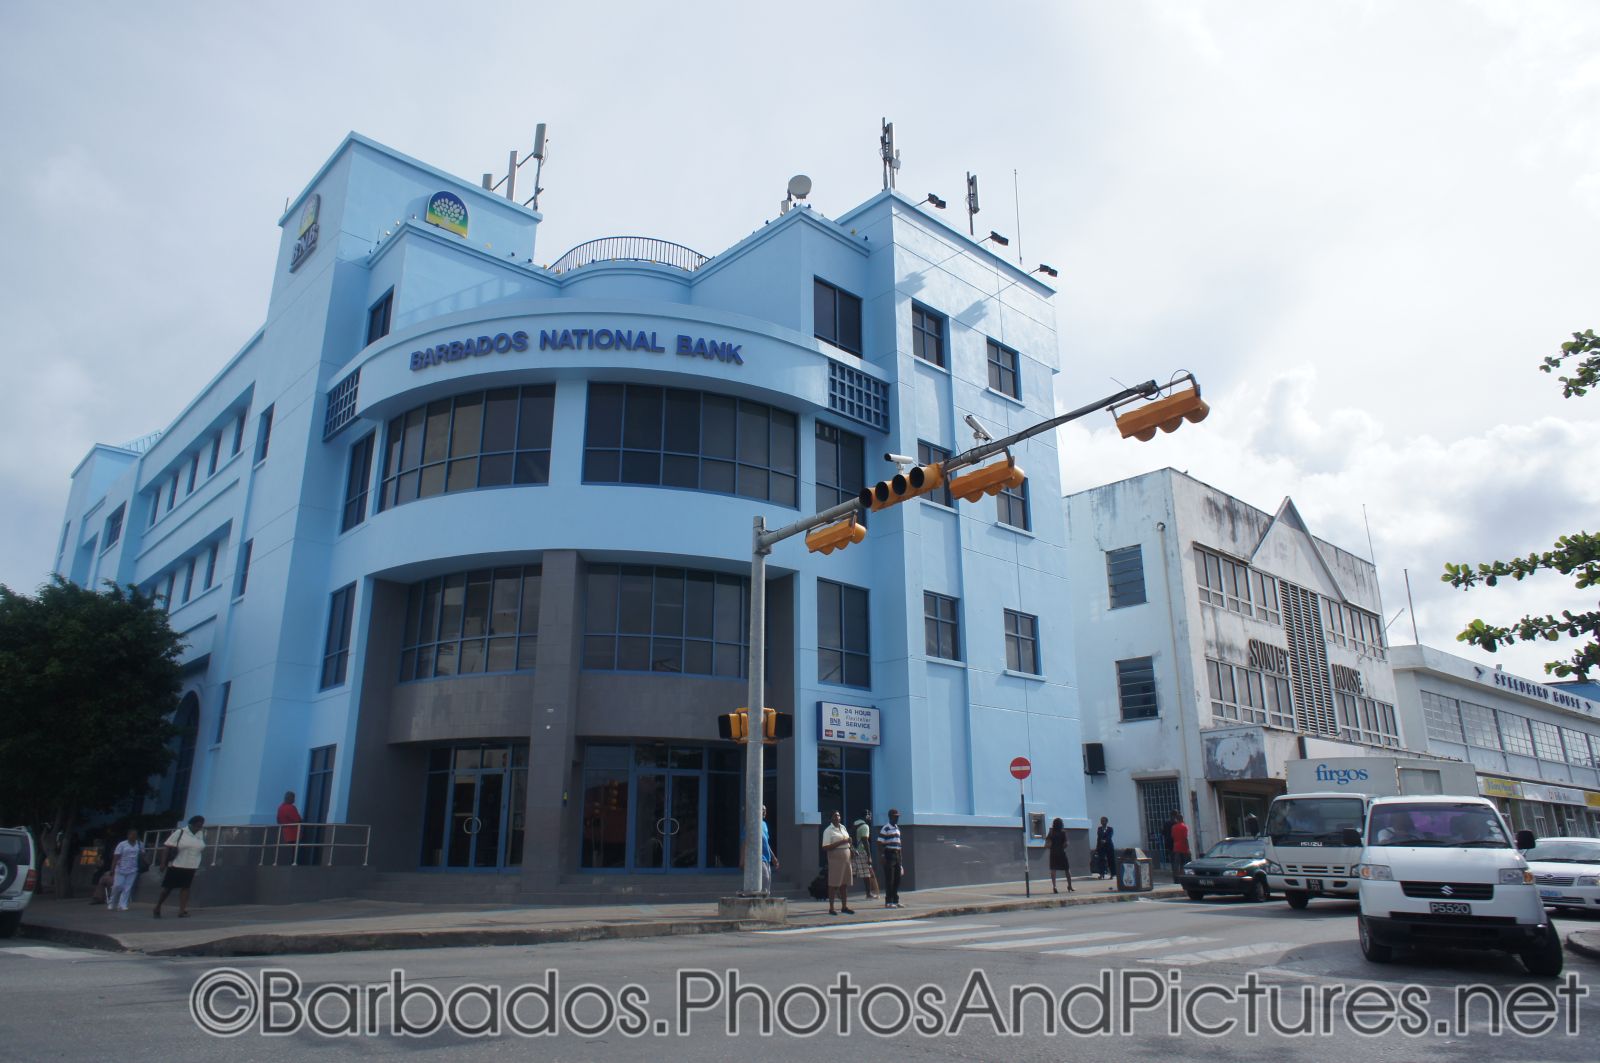 Barbados National Bank in Bridgetown Barbados.jpg
